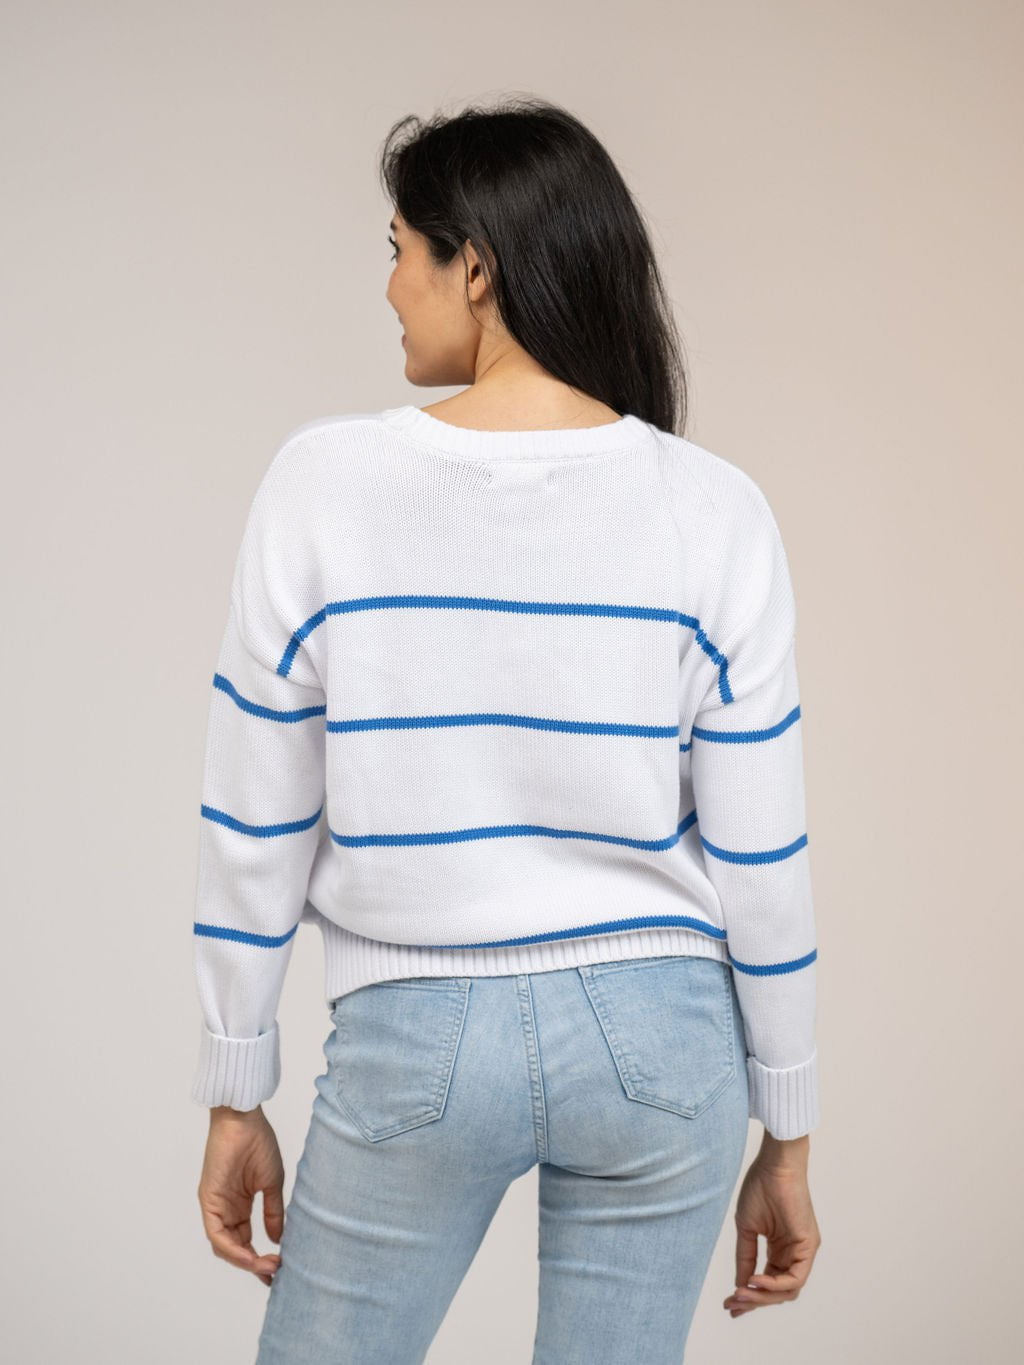 Beau & Ro Sweater Charleston Sweater in White Stripe